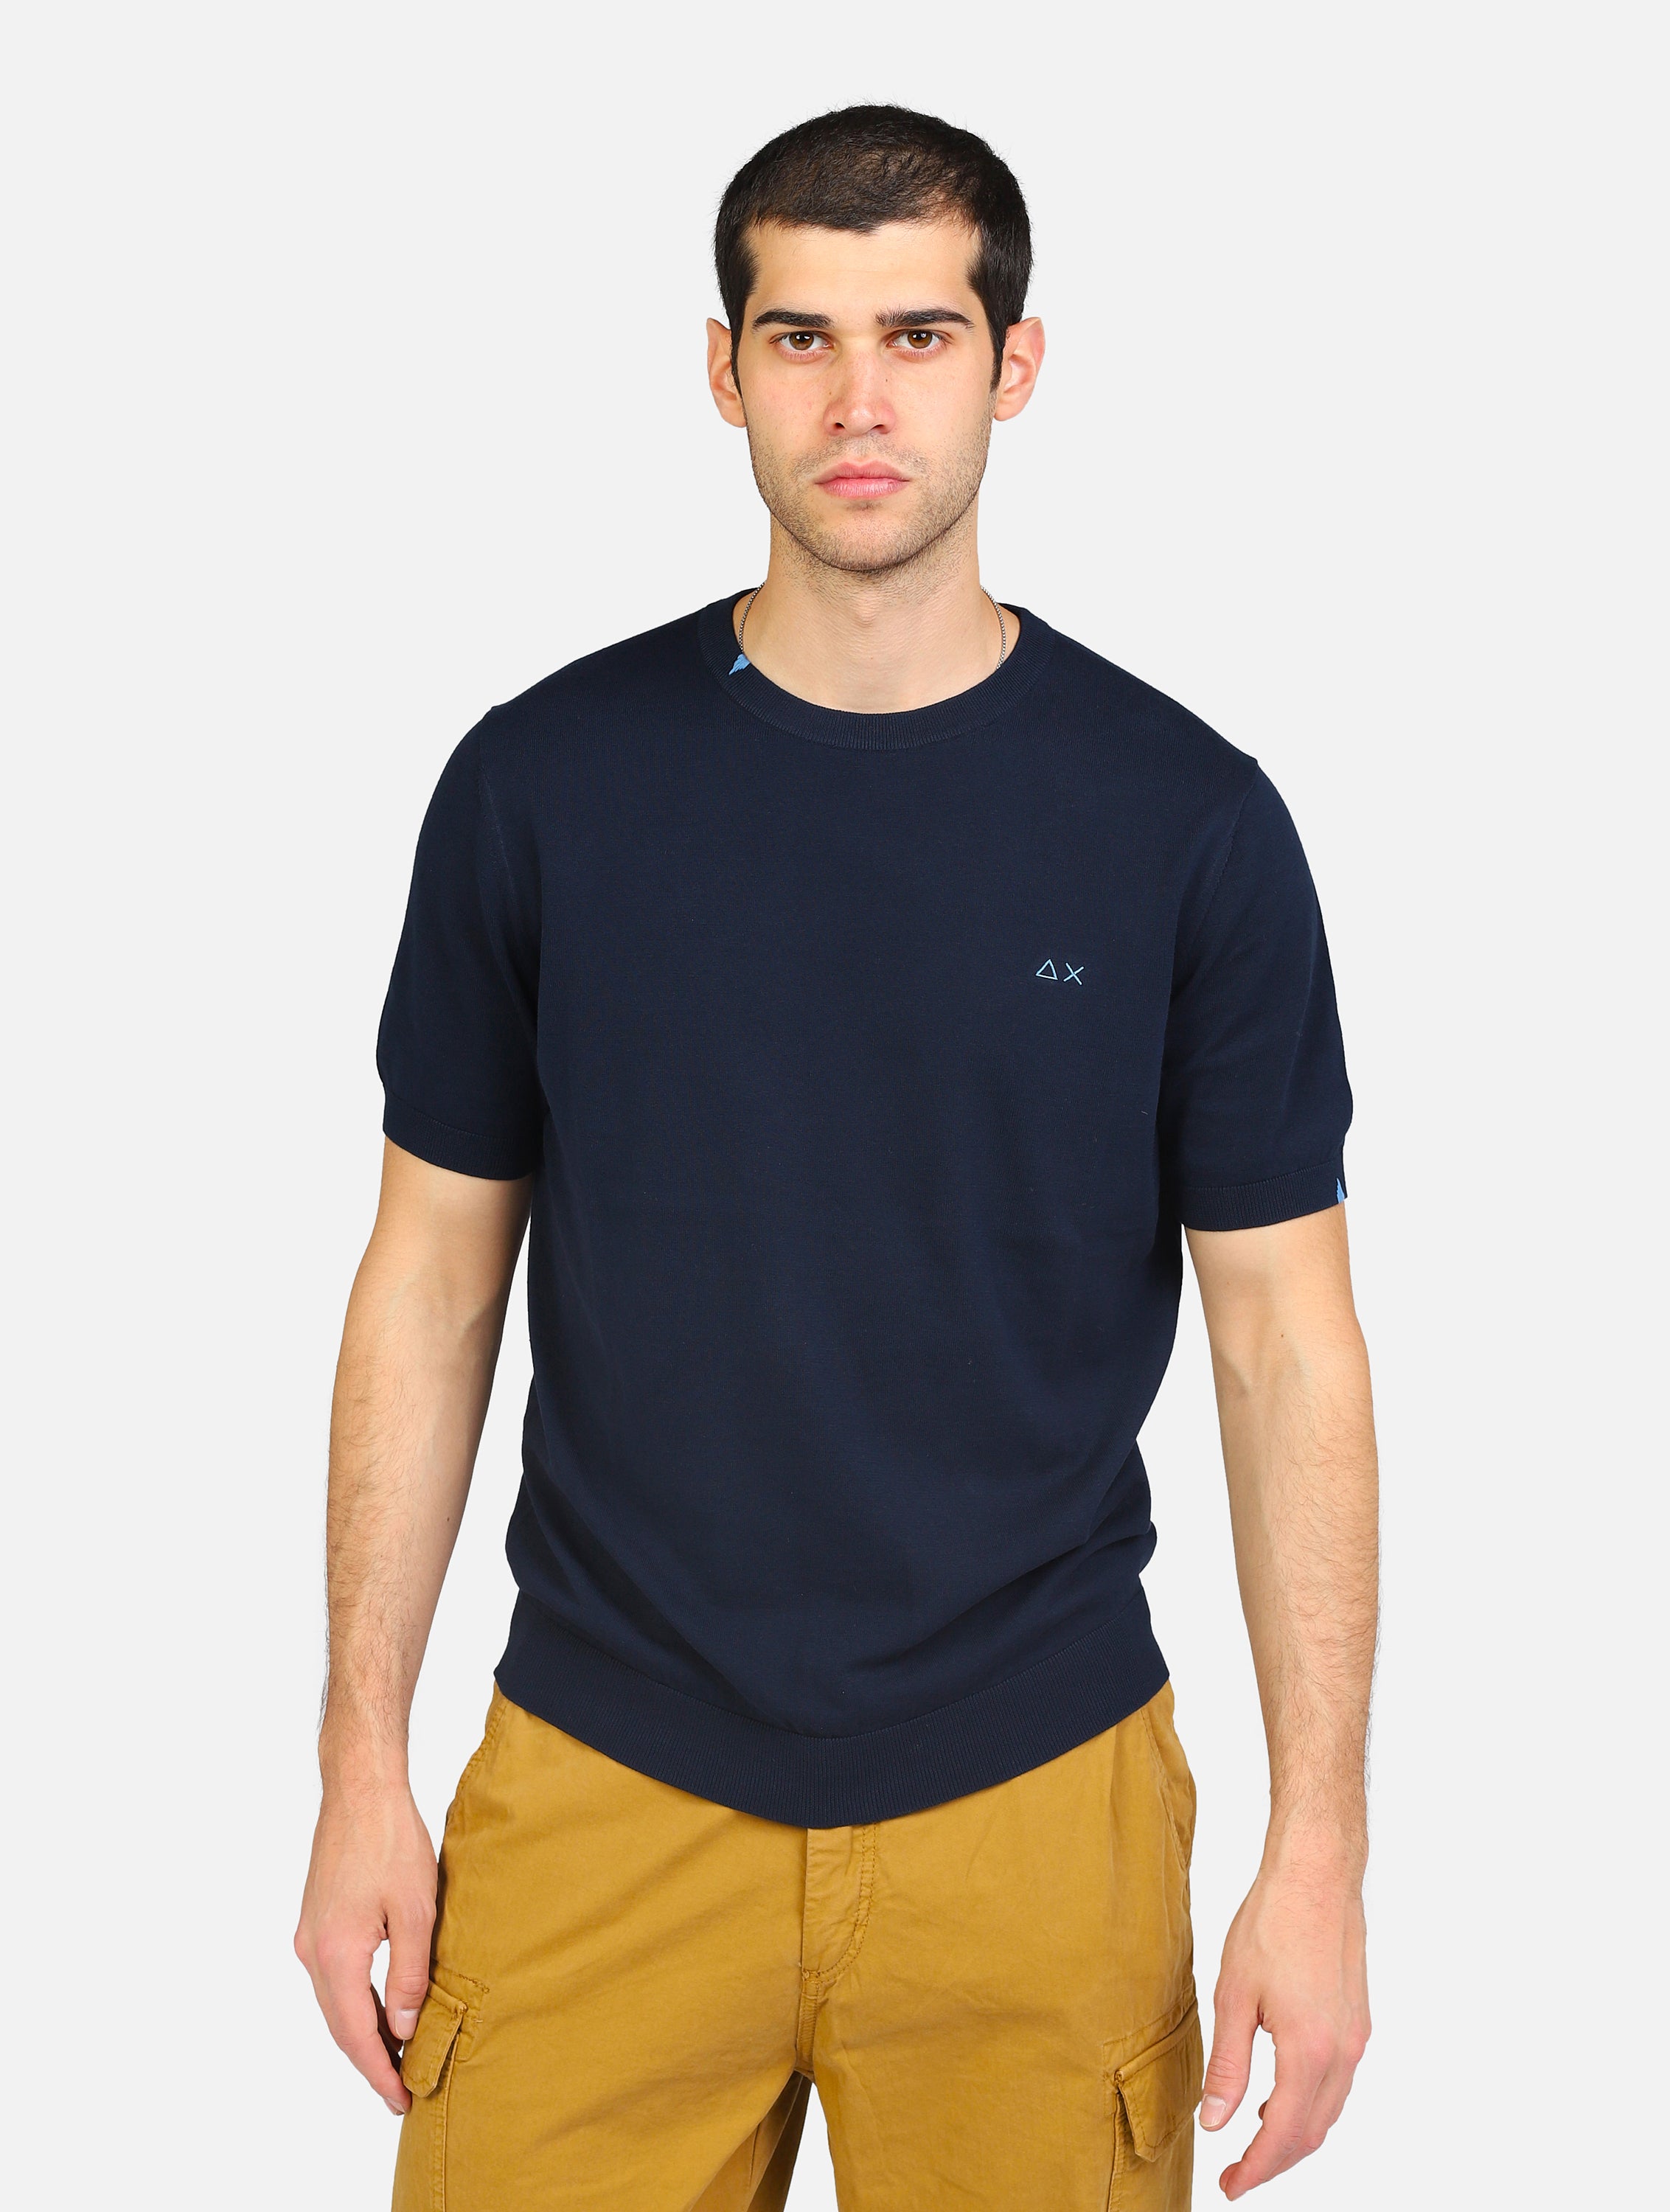 T-shirt sun68  navy blue uomo 